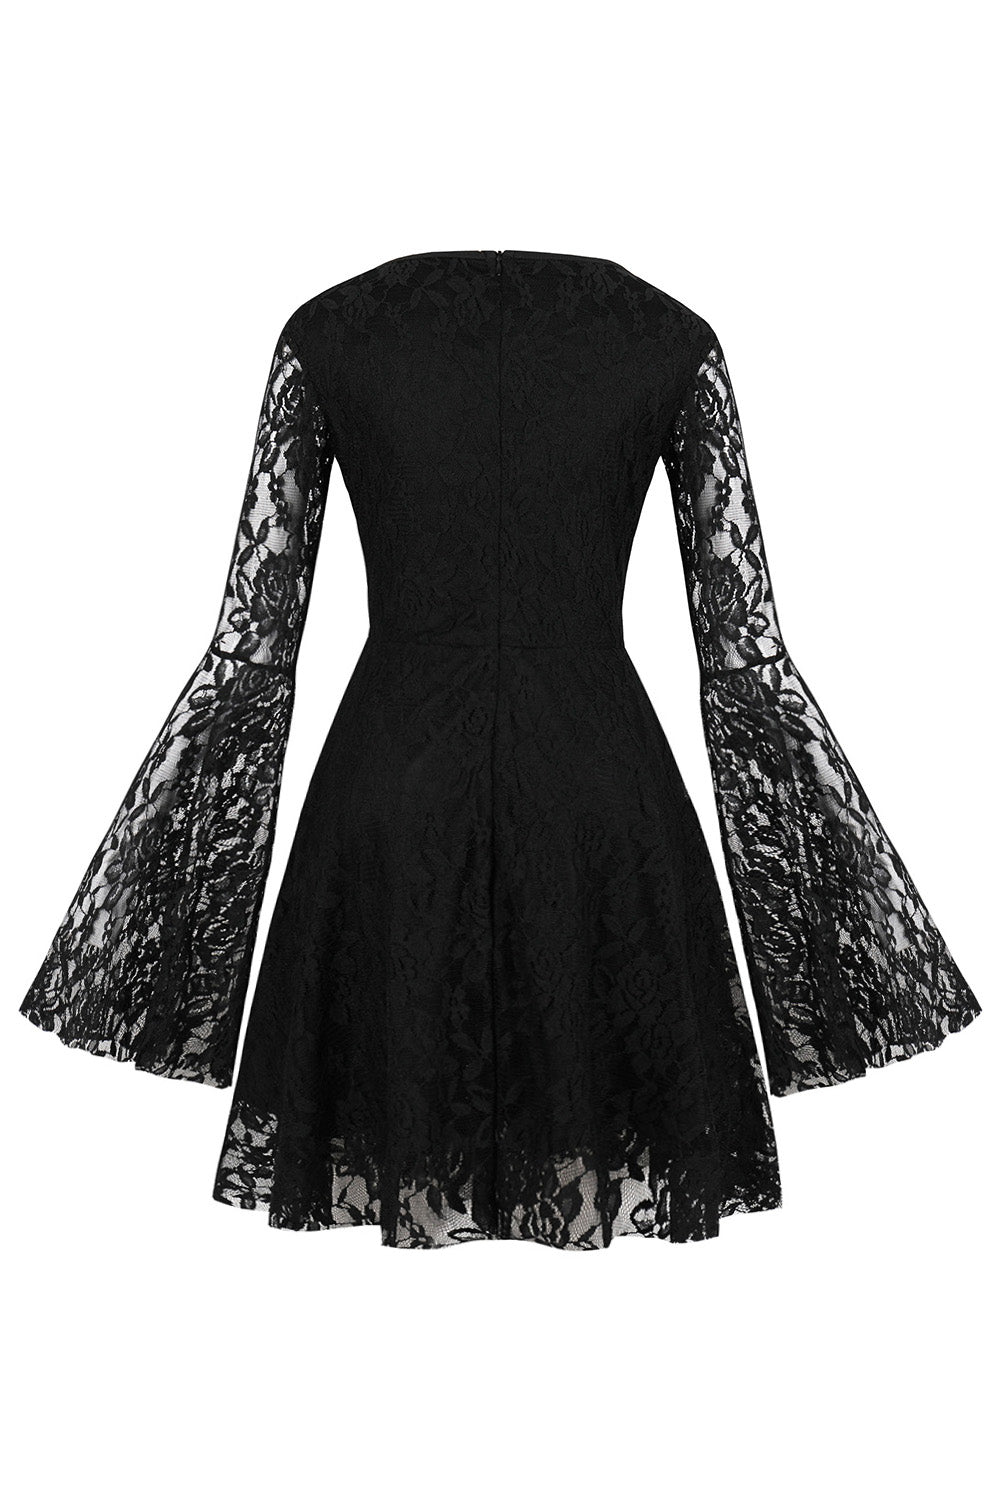 Black Long Sleeves Lace Halloween Dress